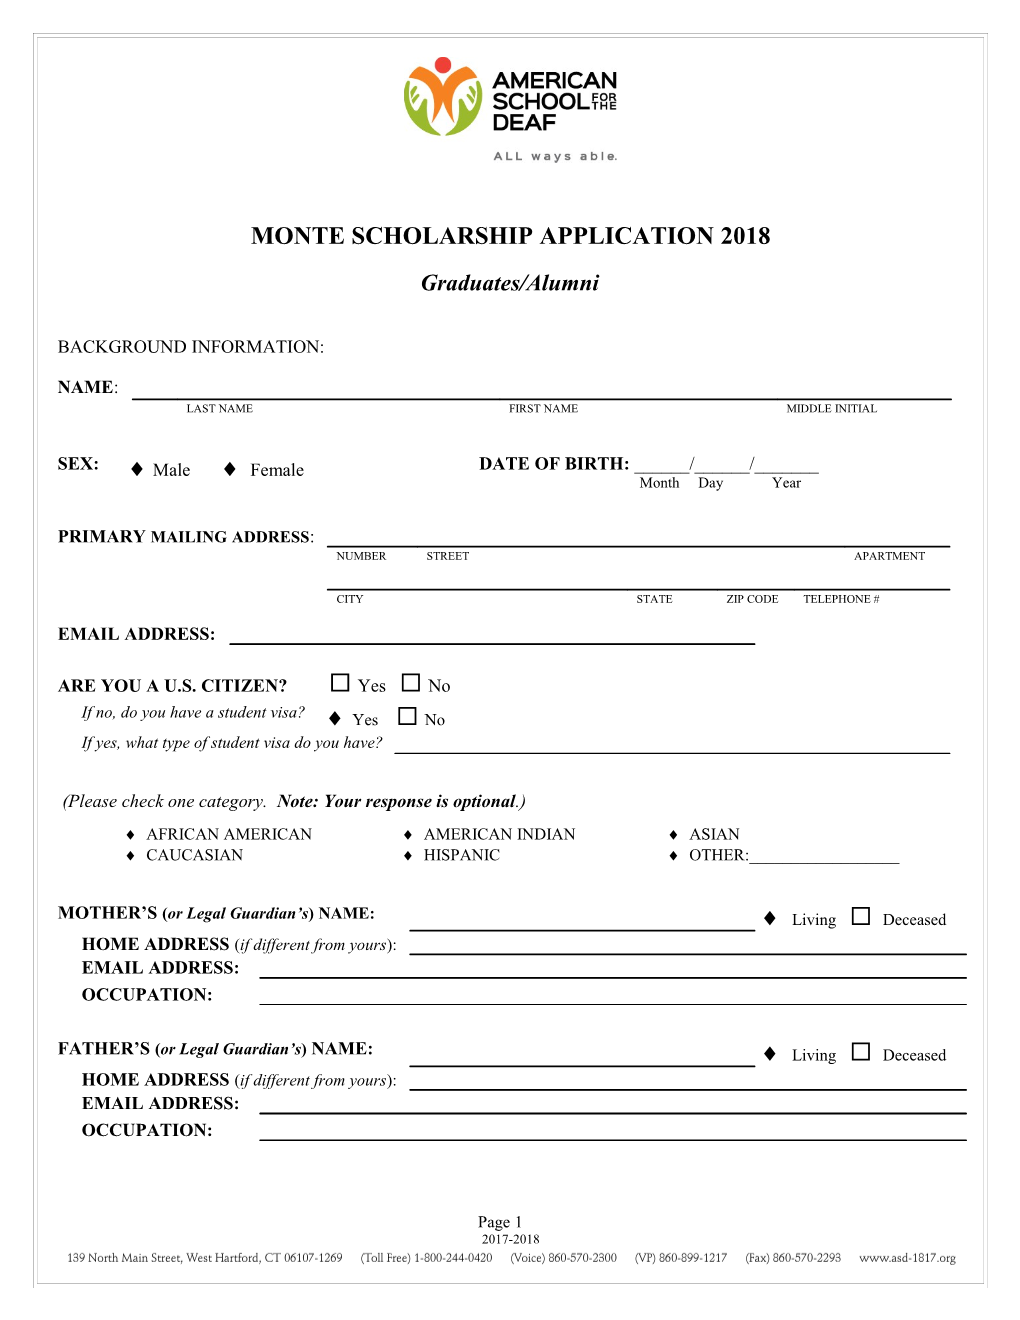 Monte Scholarship Application 2001-2002